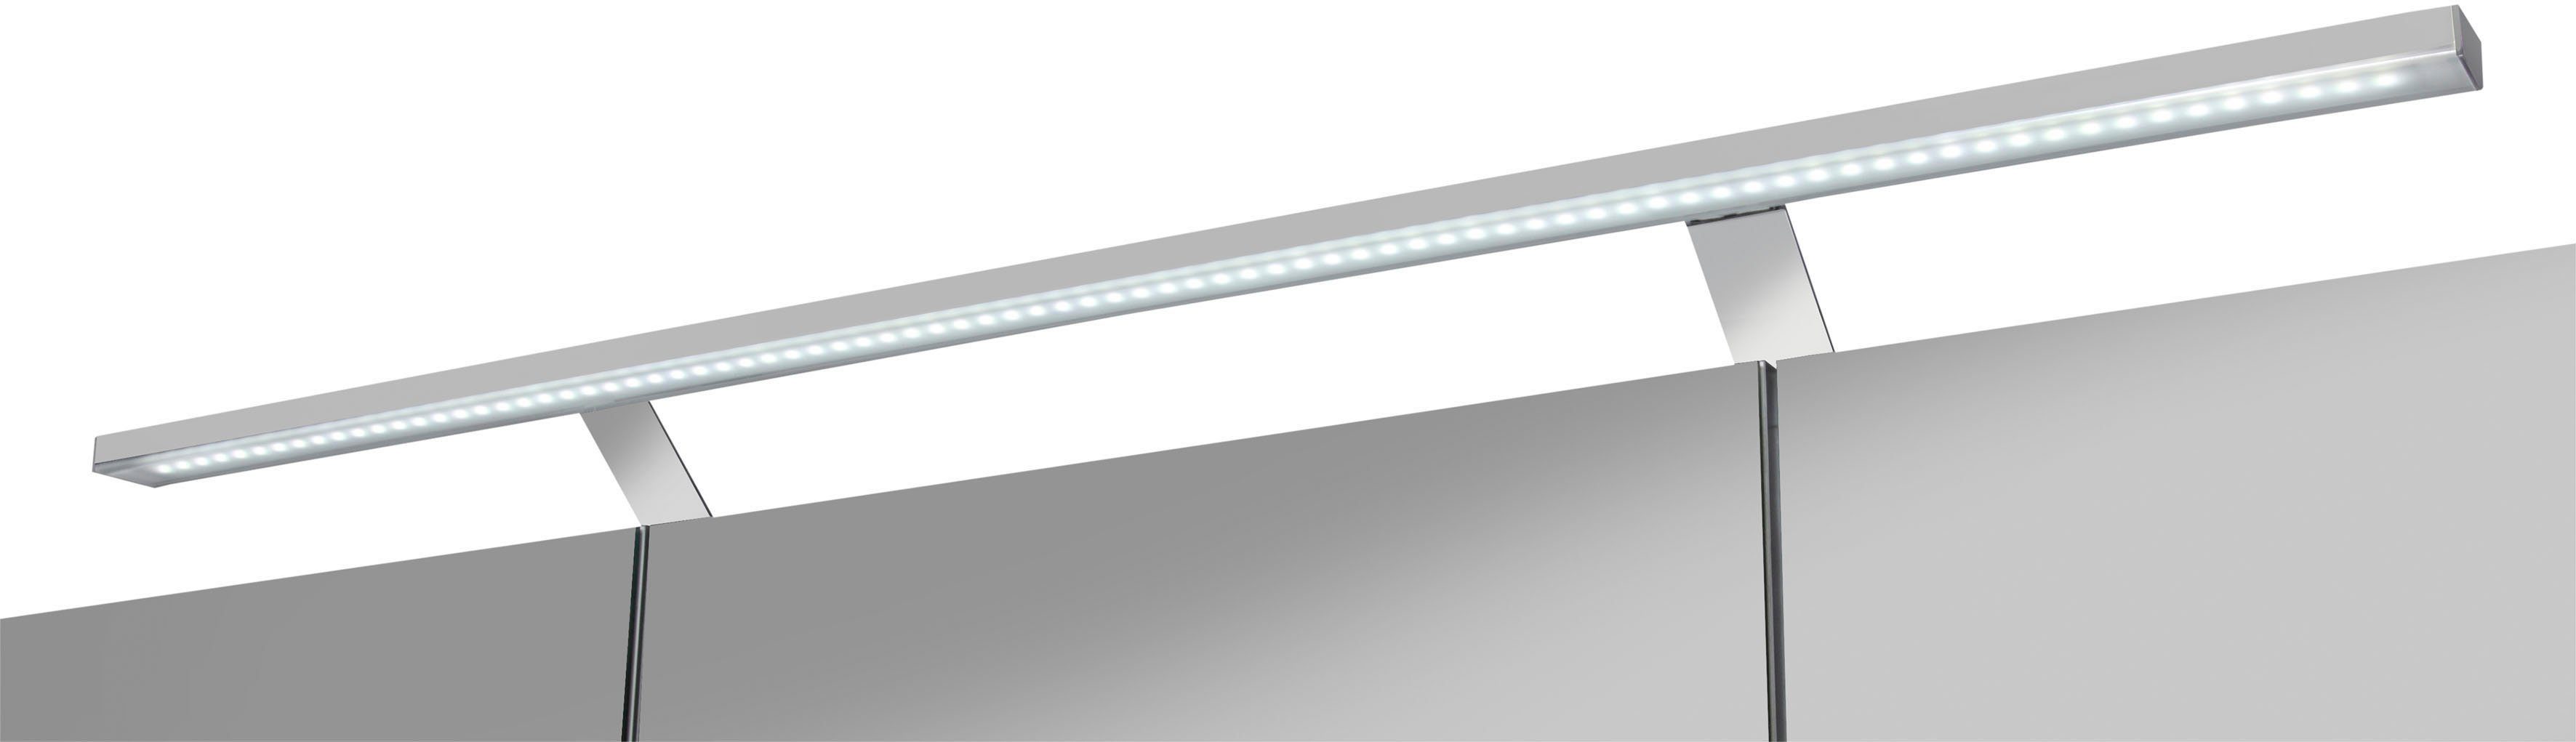 welltime cm, Schalter-/Steckdosenbox basaltgrau basaltgrau Breite 100 LED-Beleuchtung, Spiegelschrank 3-türig, Torino |